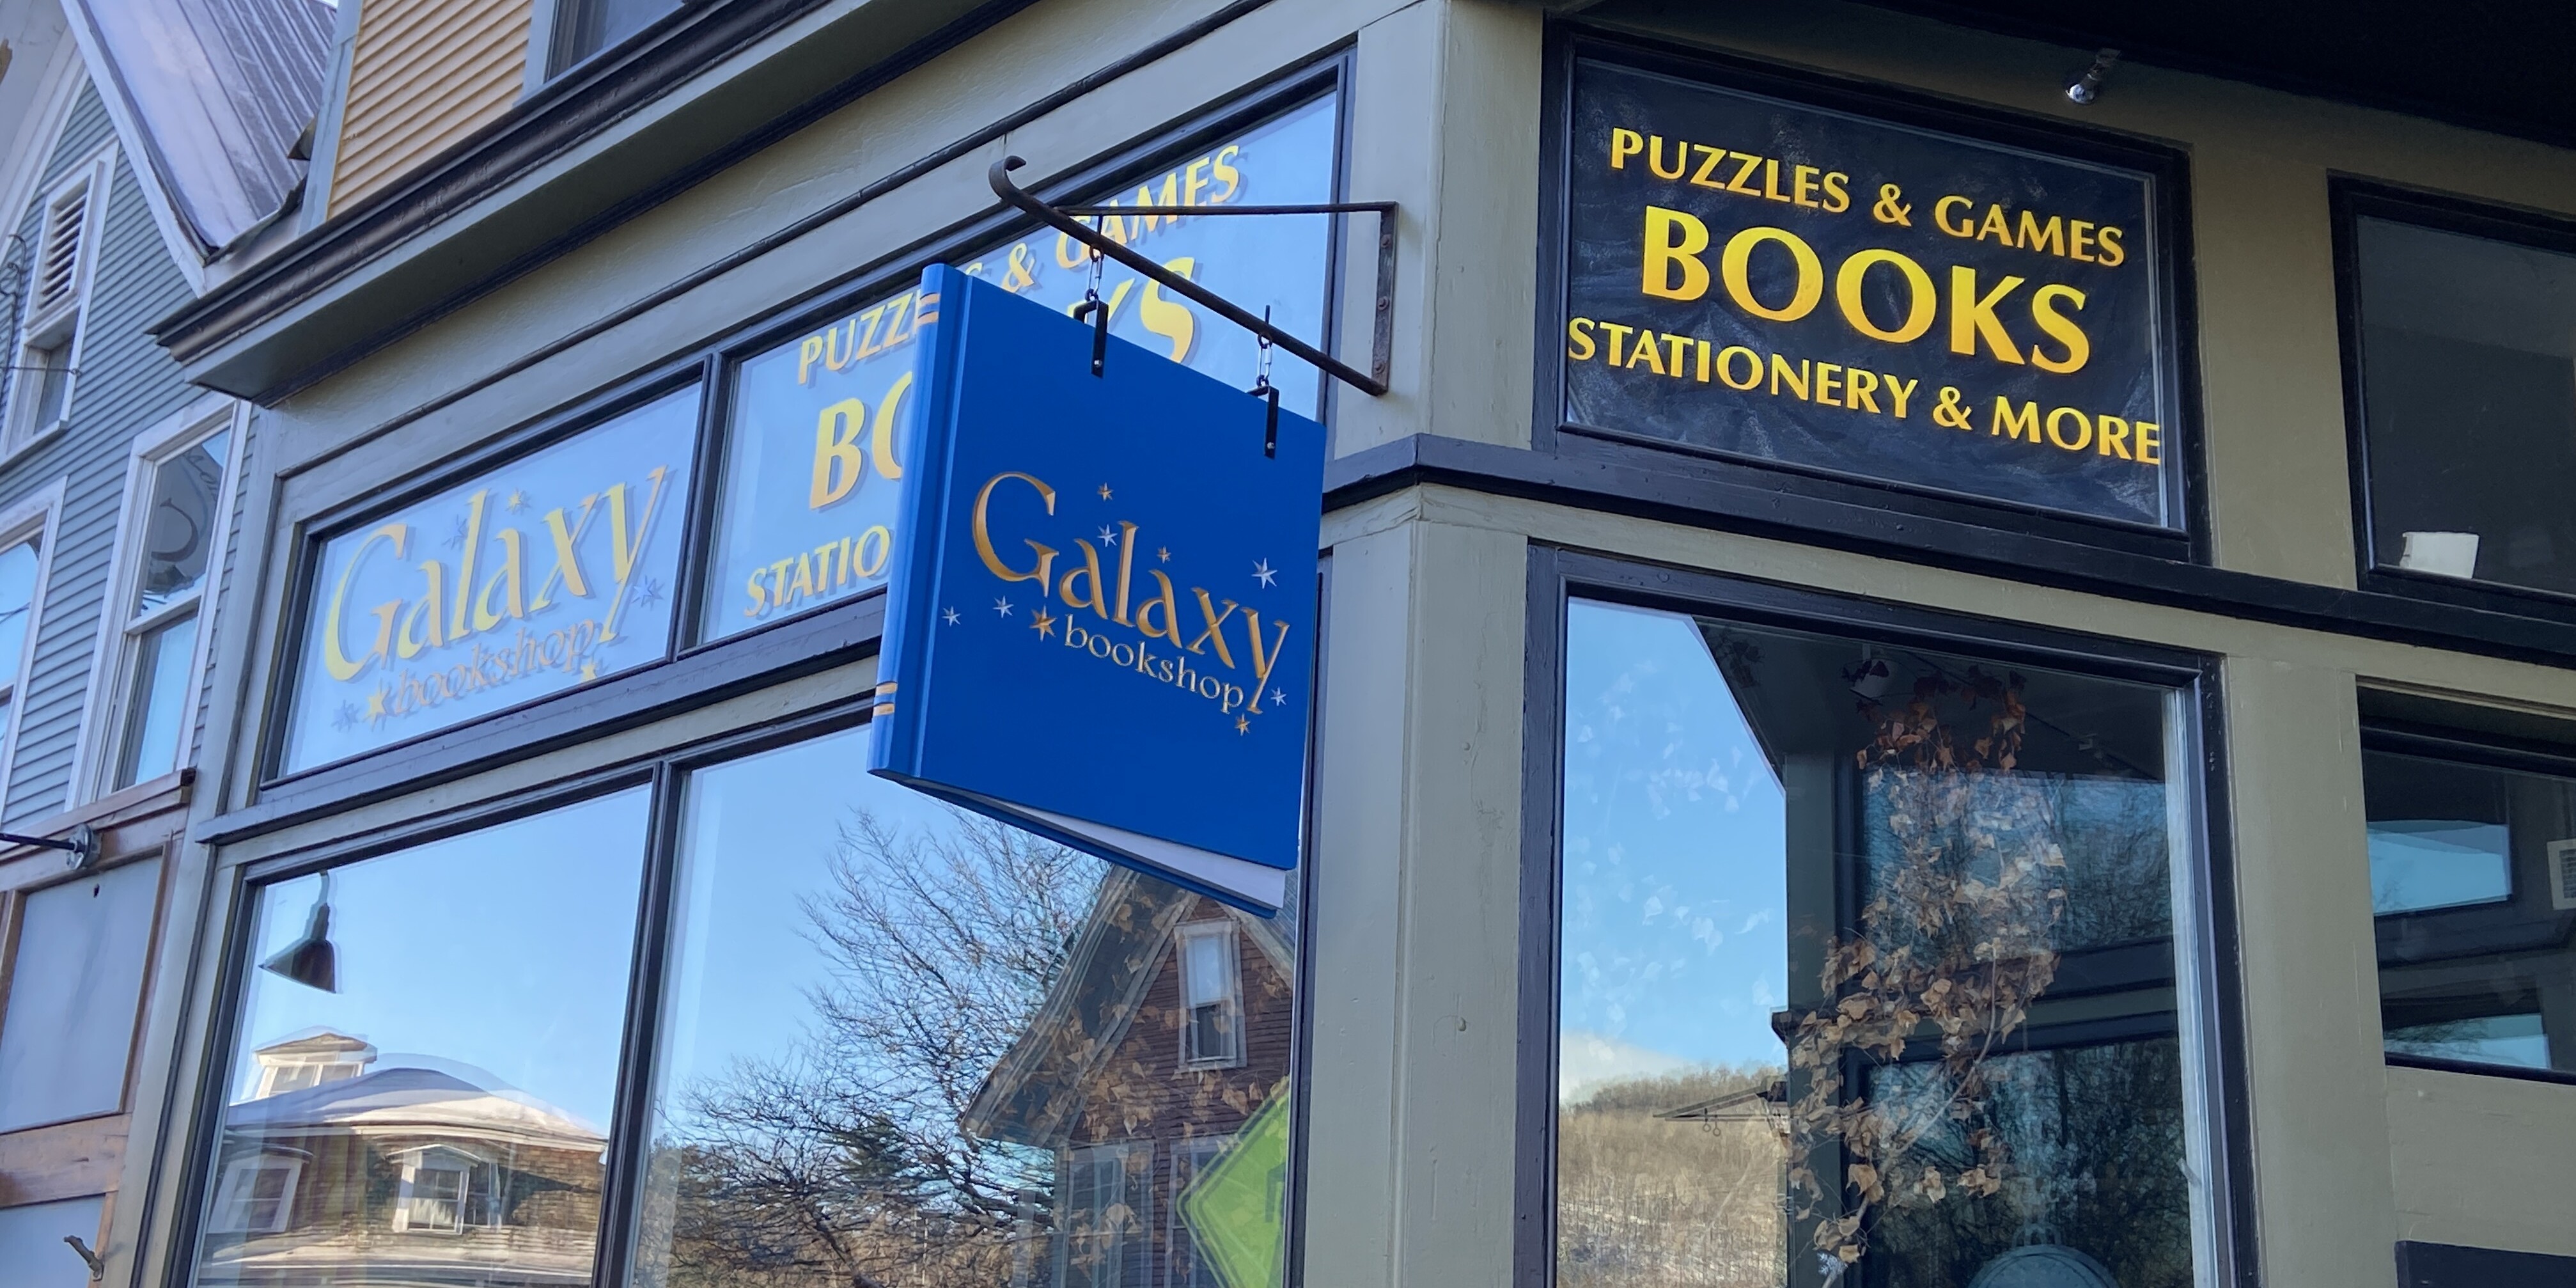 Galaxy bookshop custom sign by Great Big Graphics